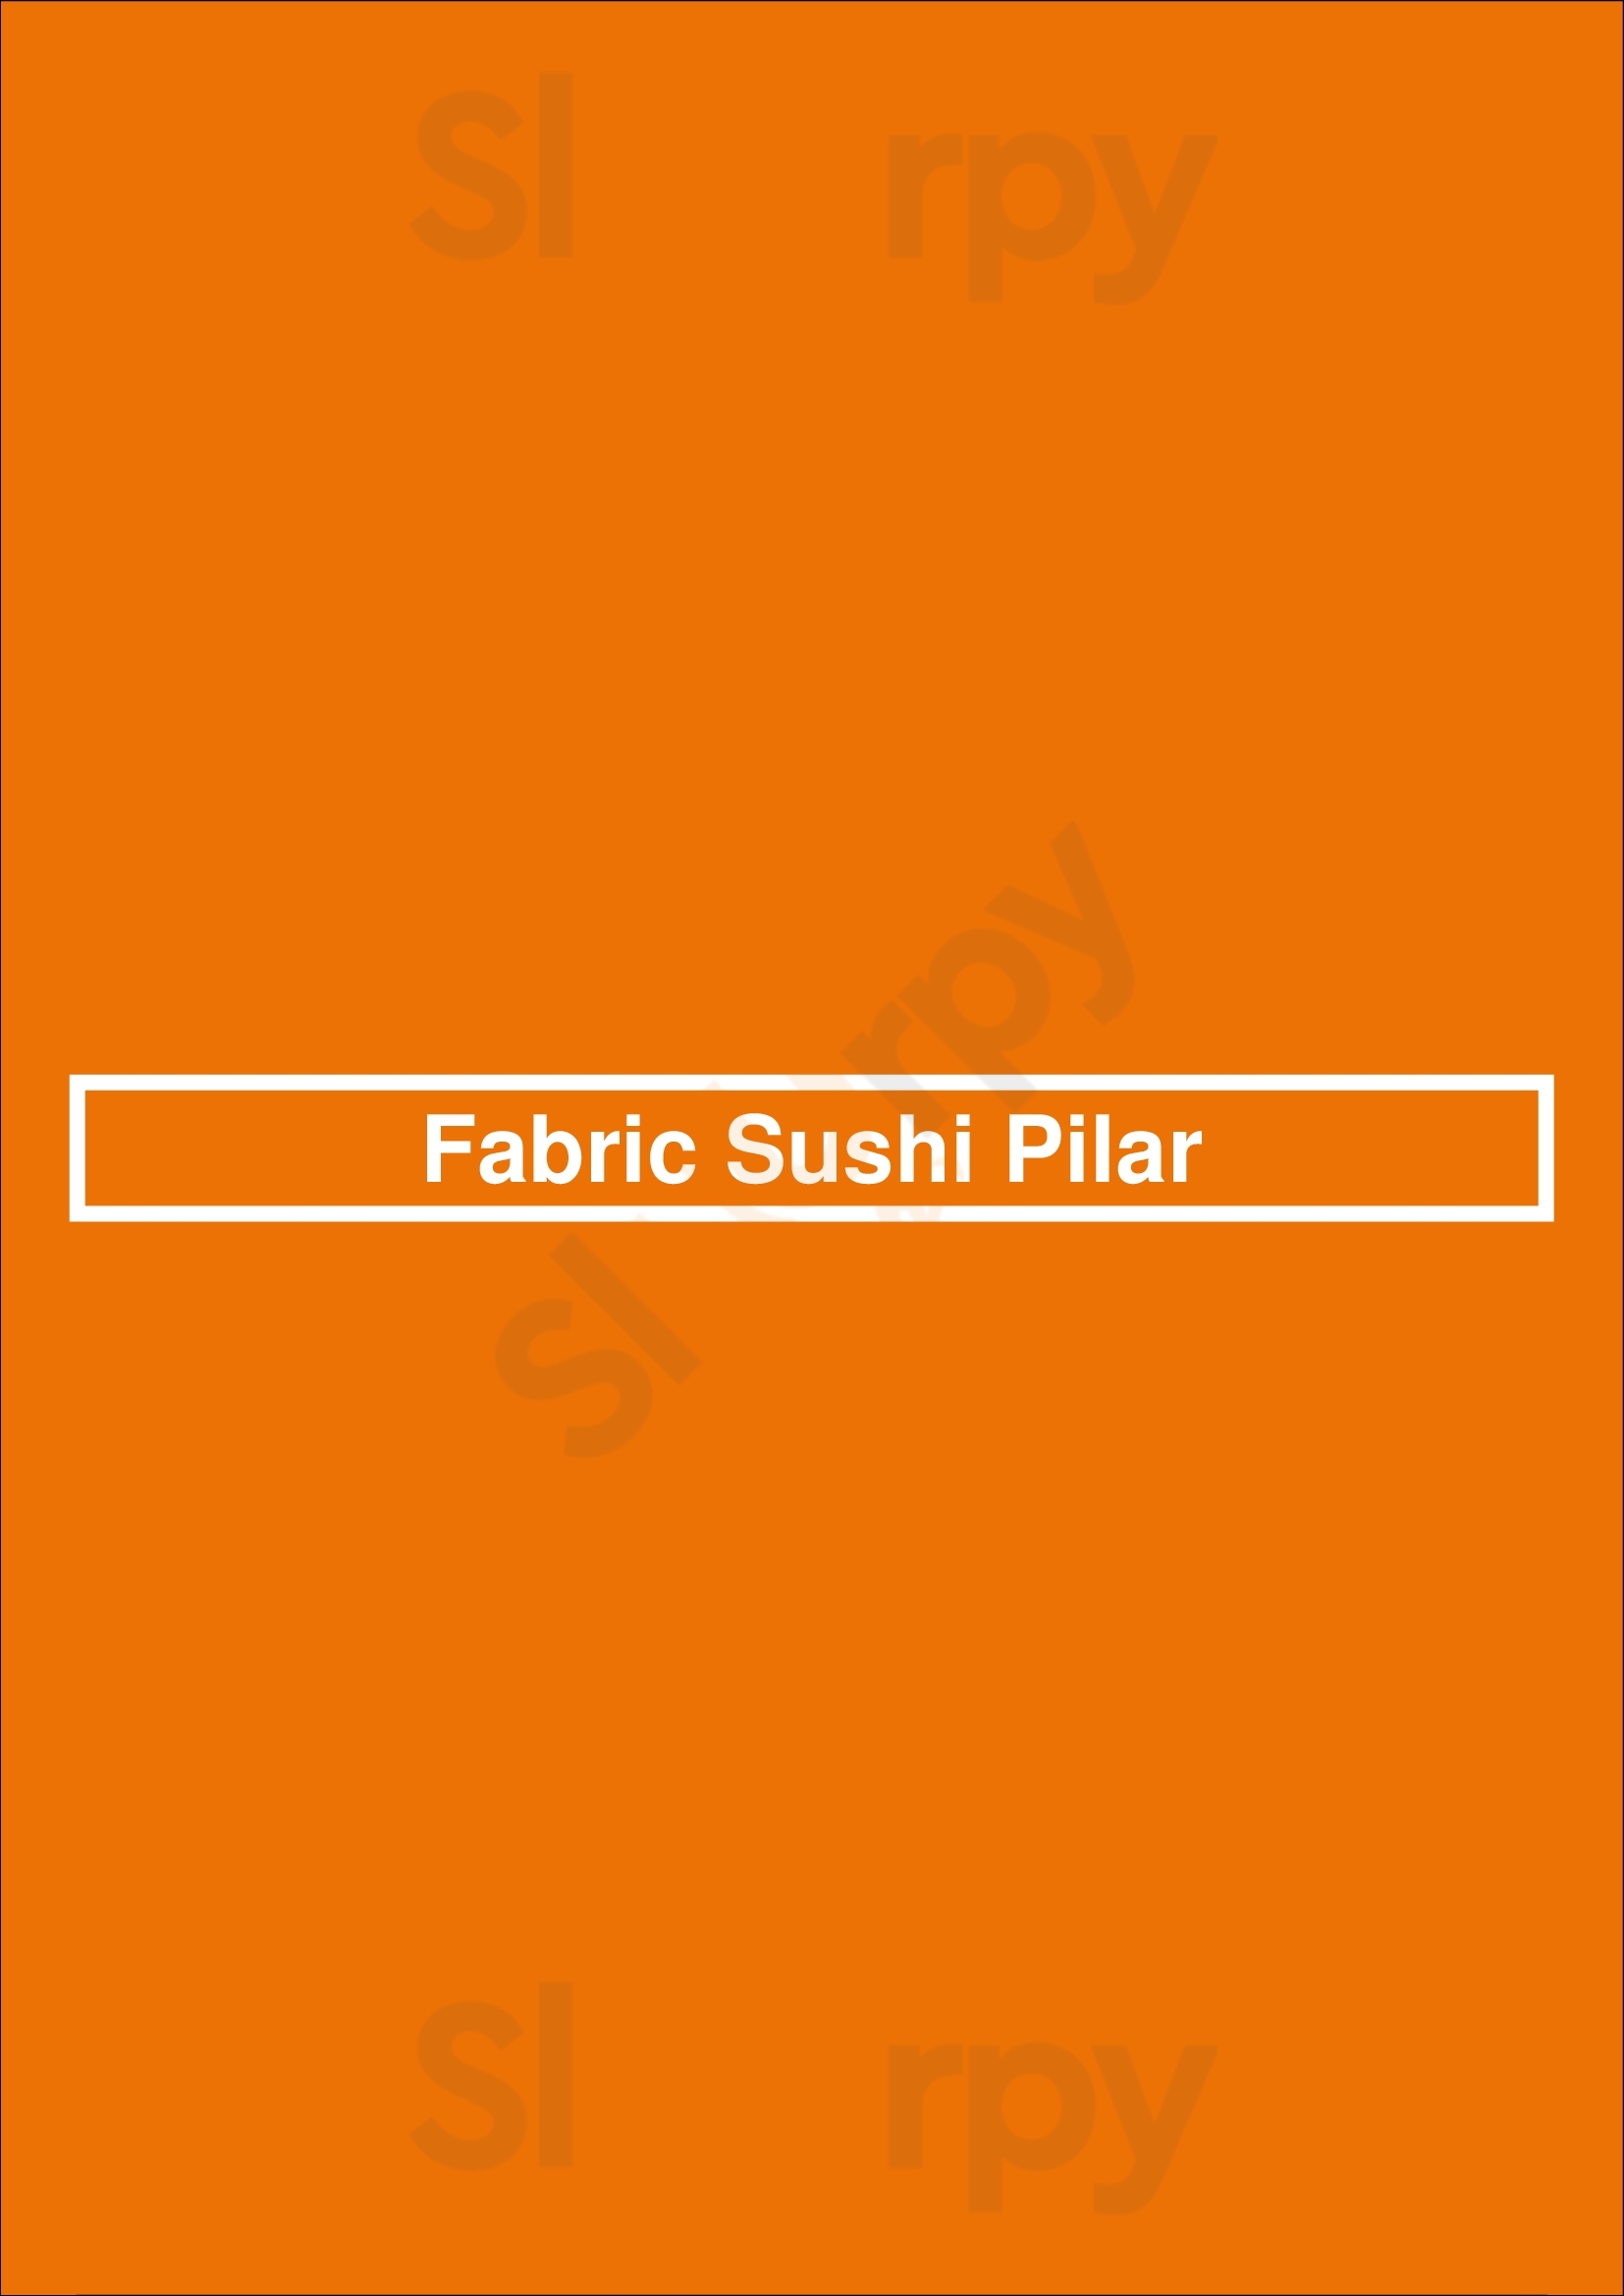 Fabric Sushi Pilar Pilar Menu - 1